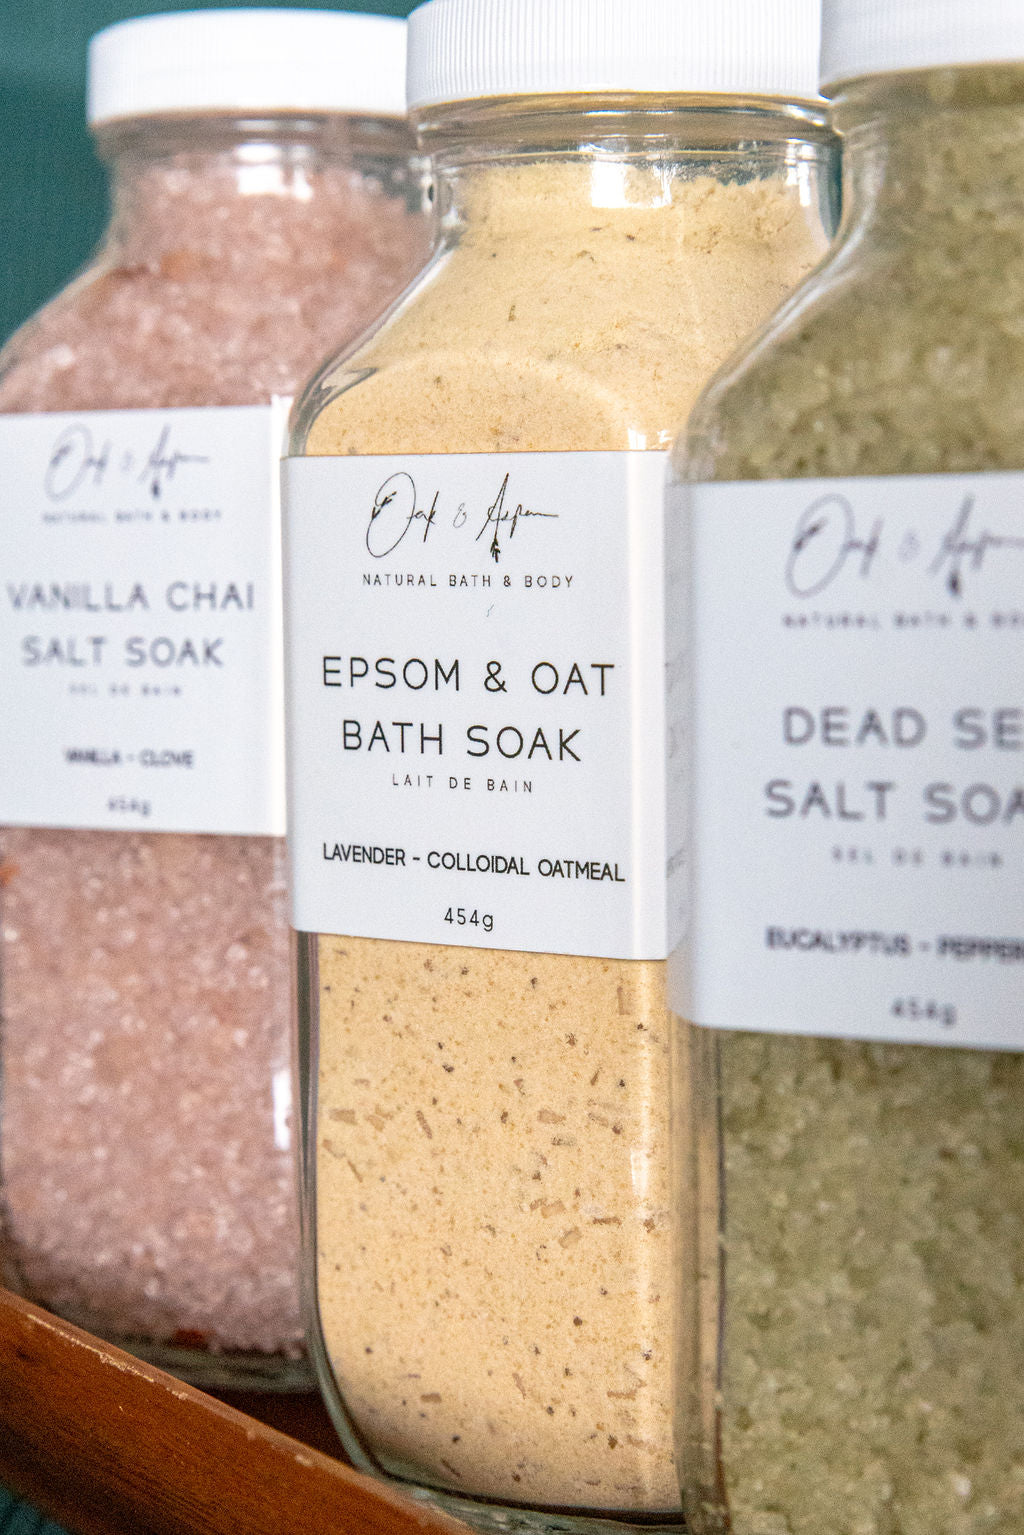 Wholesale - Salt Soak: Dead Sea